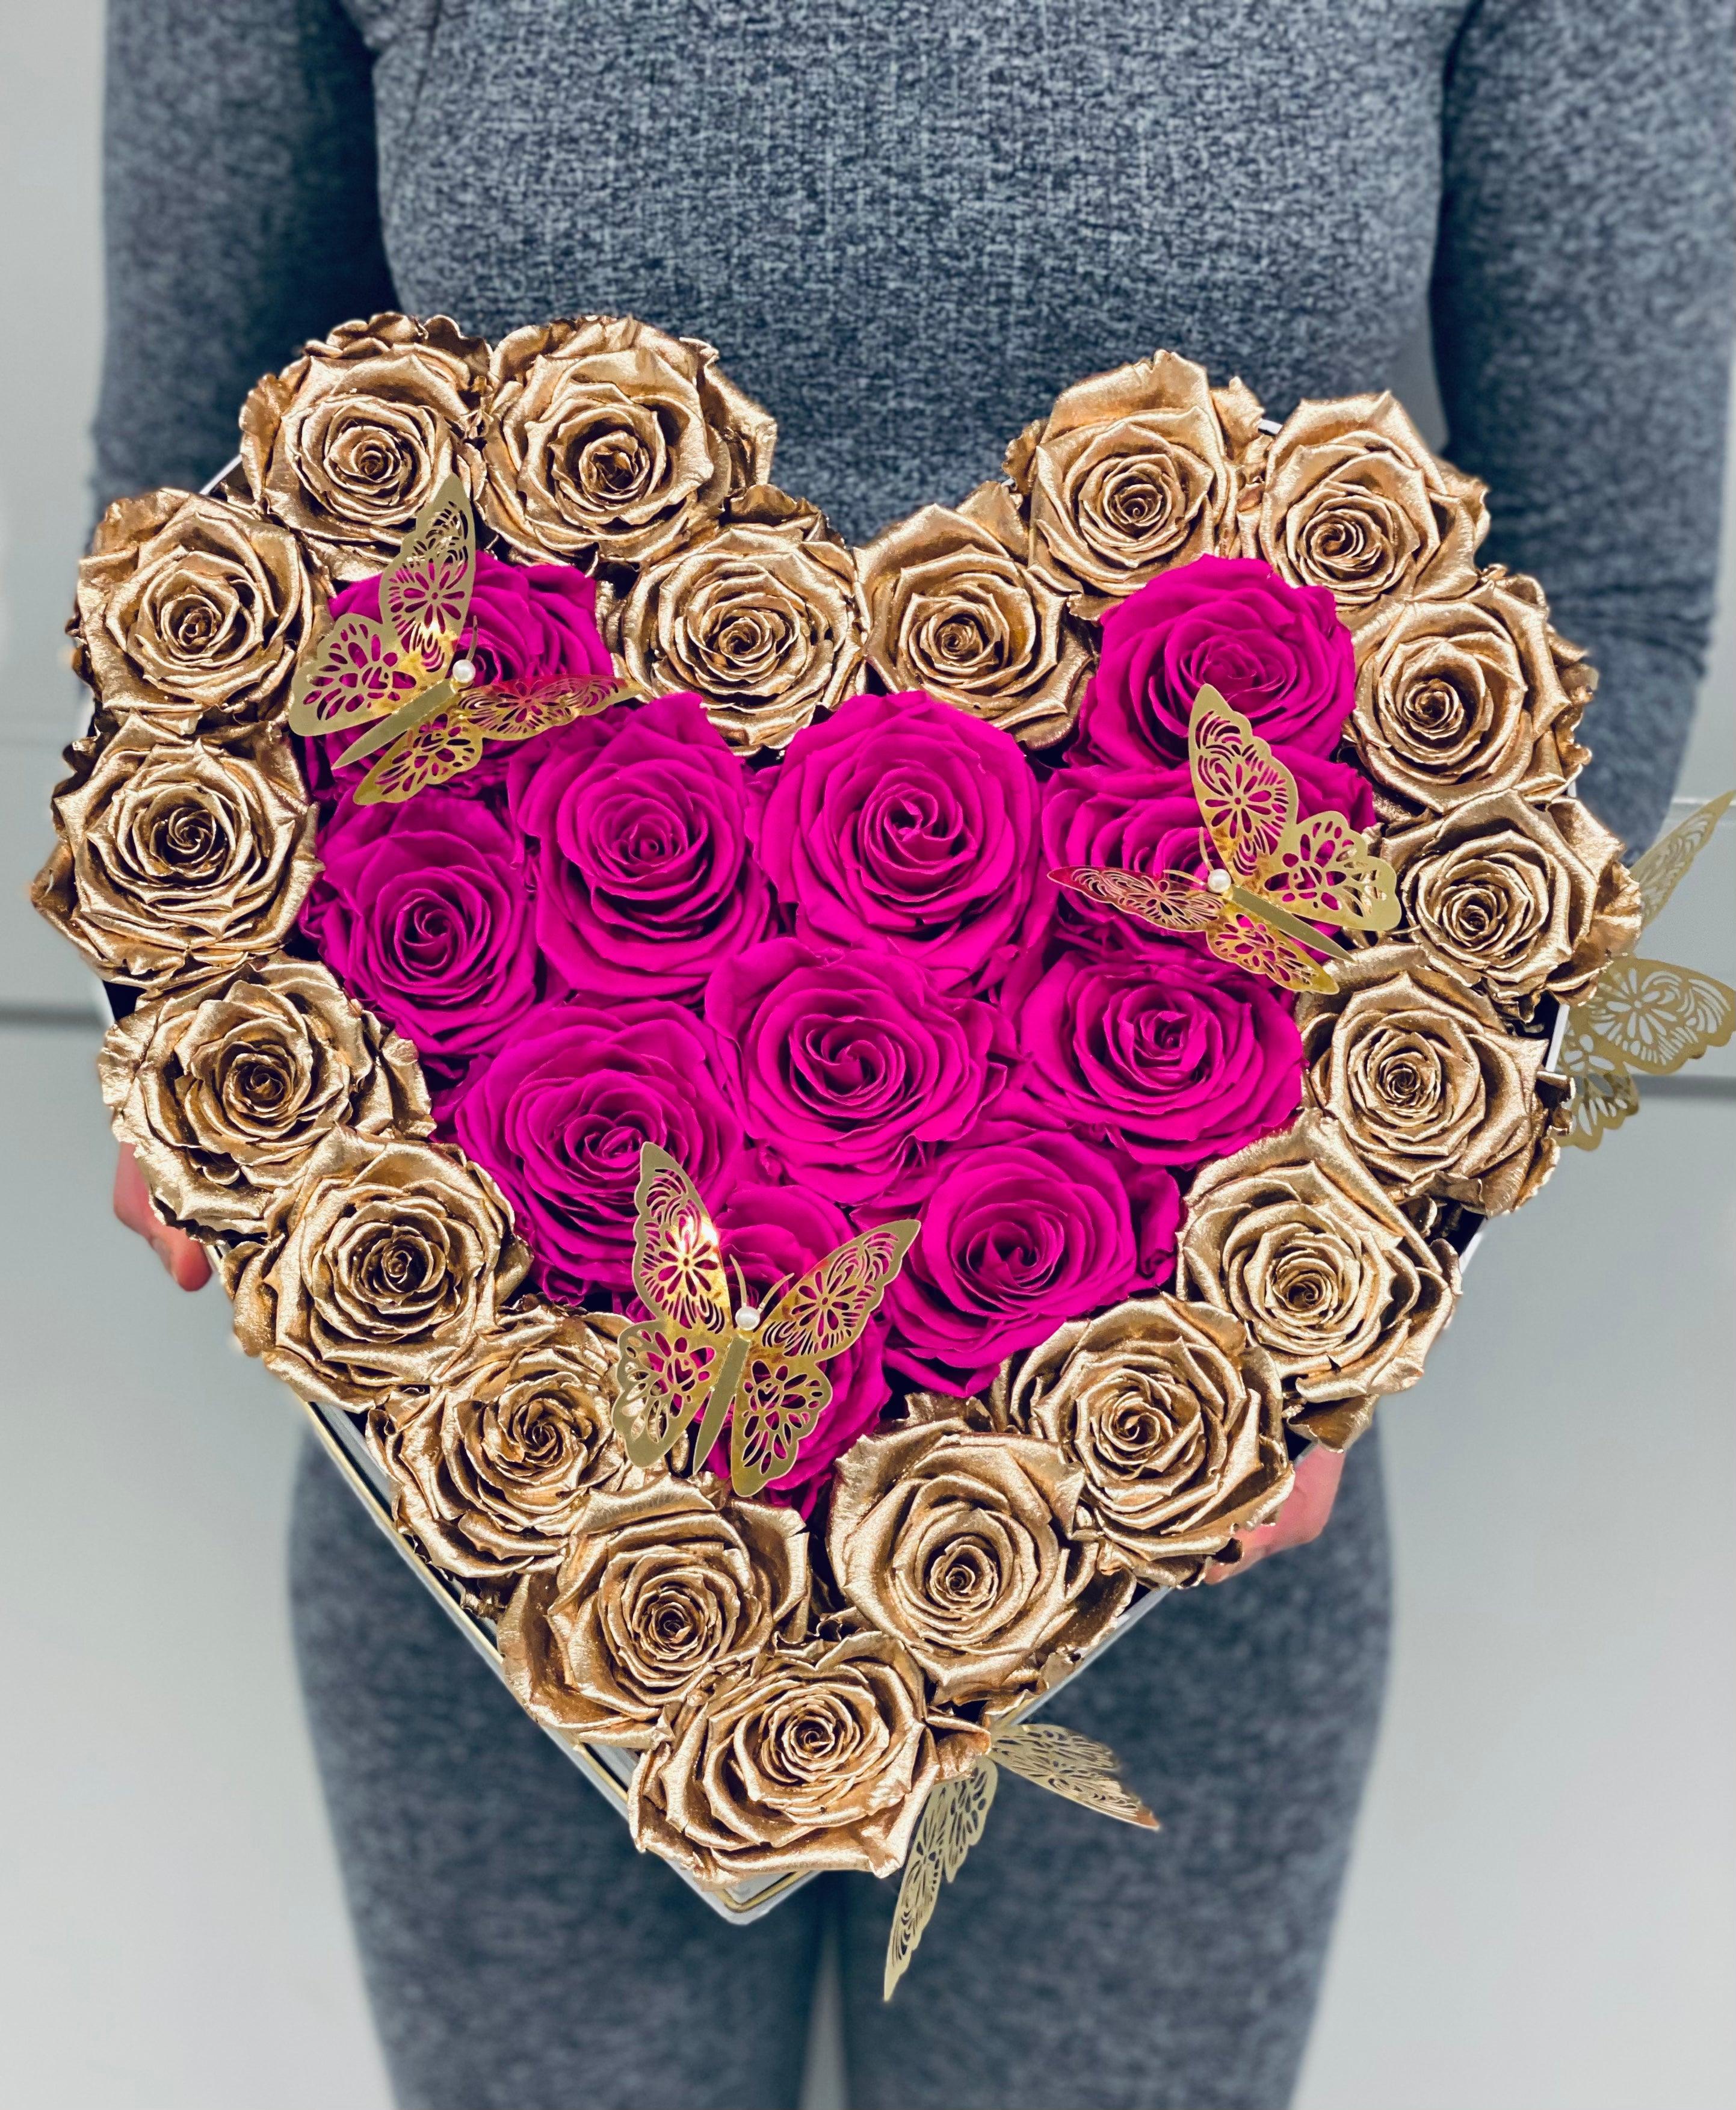 XL Heart Box - Preserved Roses - Flor De Lux